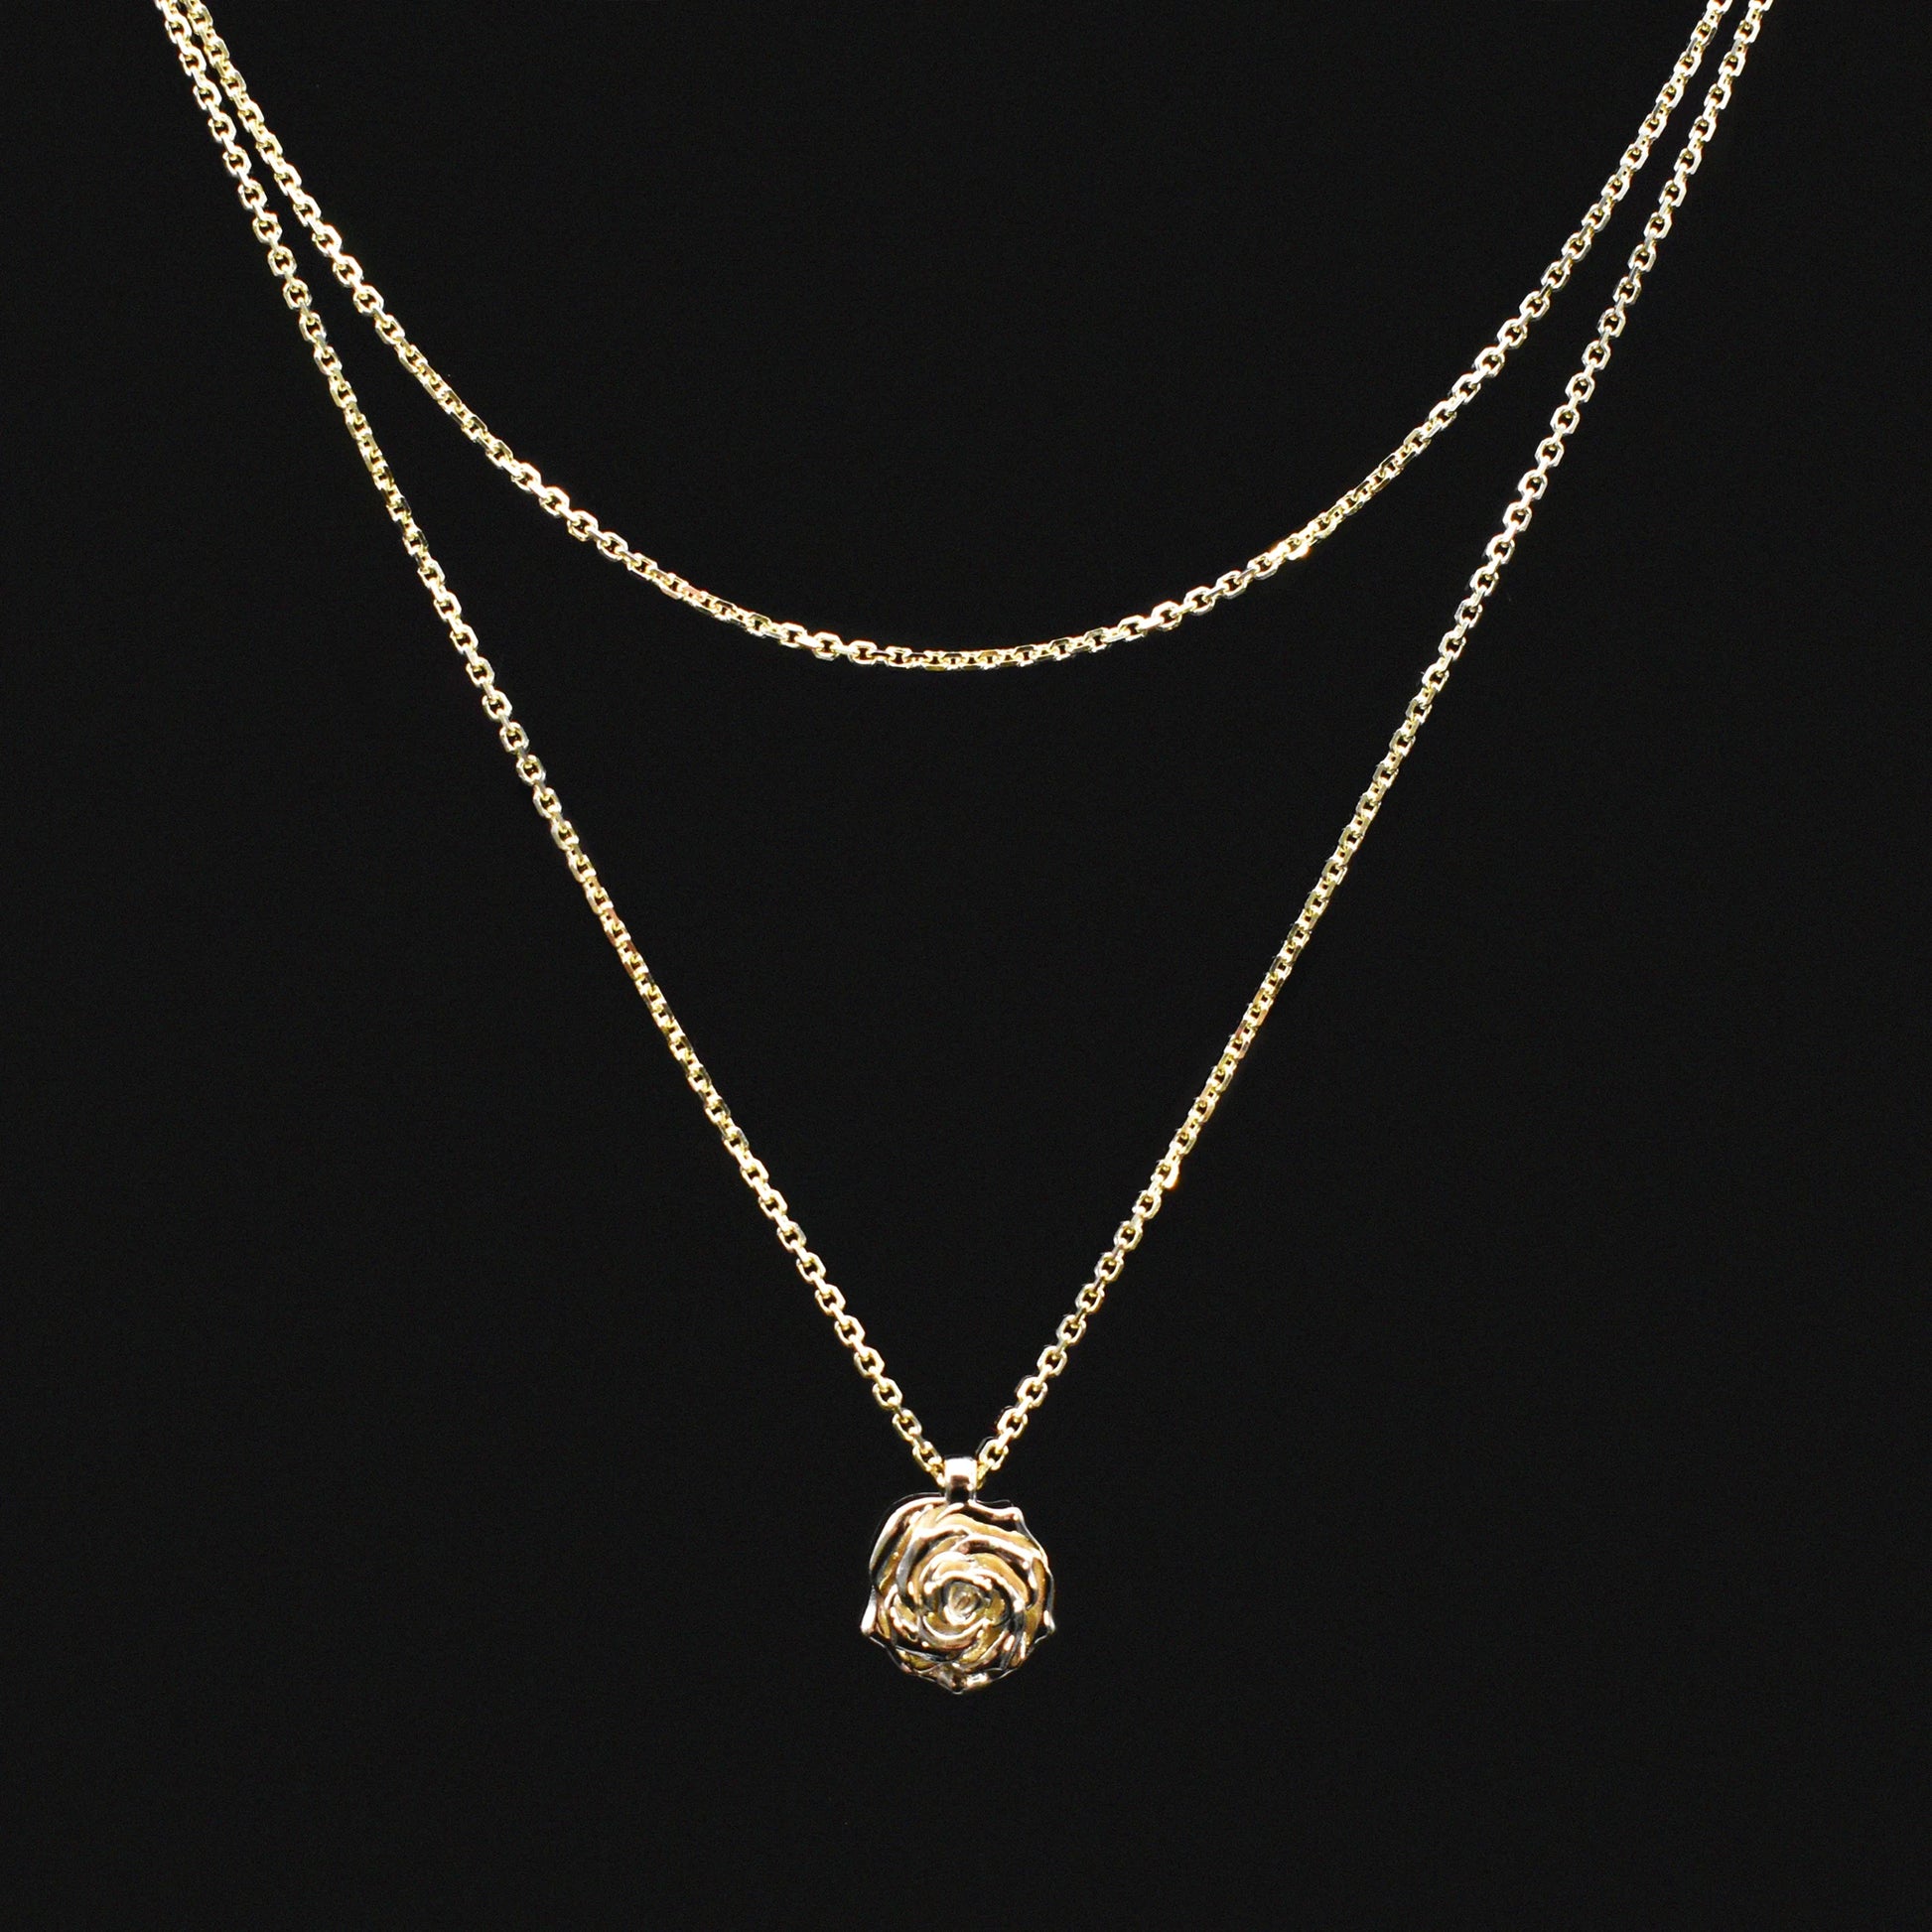 gold rose pendant yellow 14k necklace chain mini small minimal